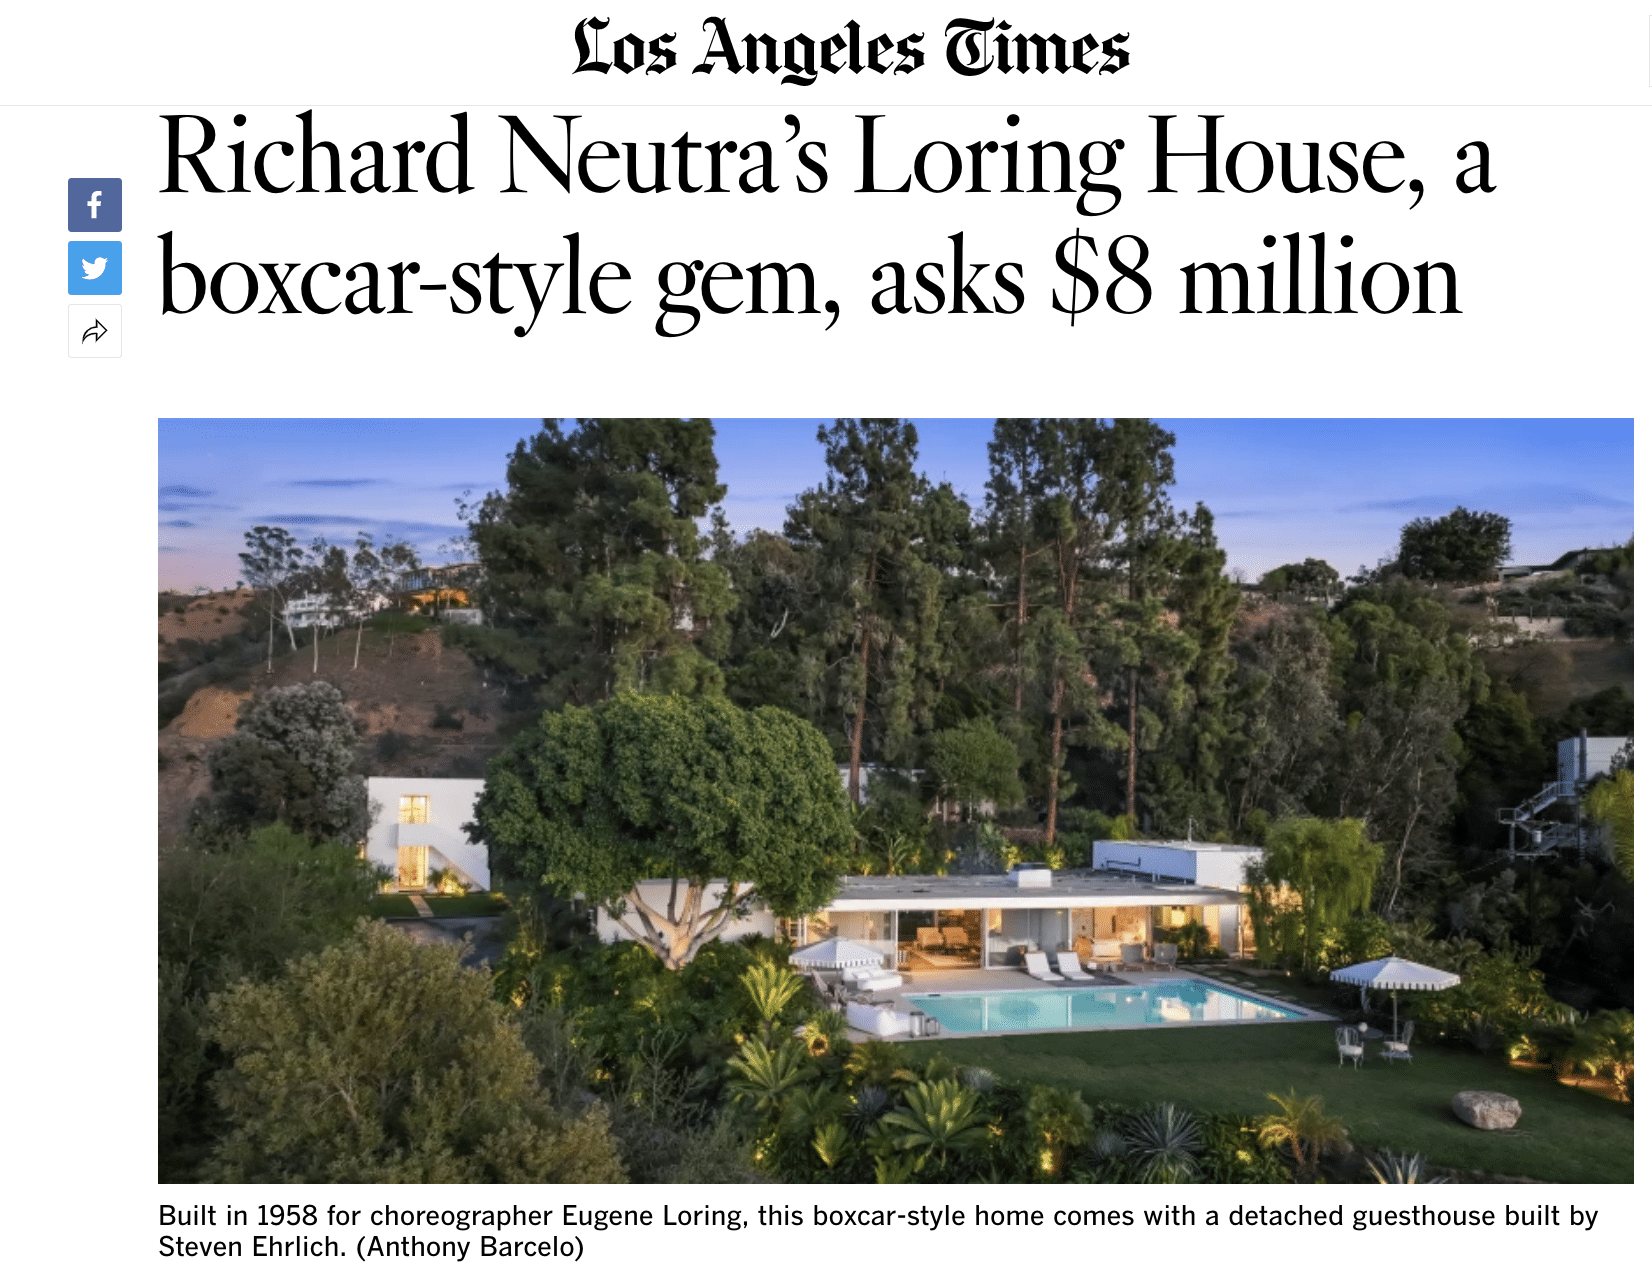 Richard Neutra’s Loring House asks $8 million